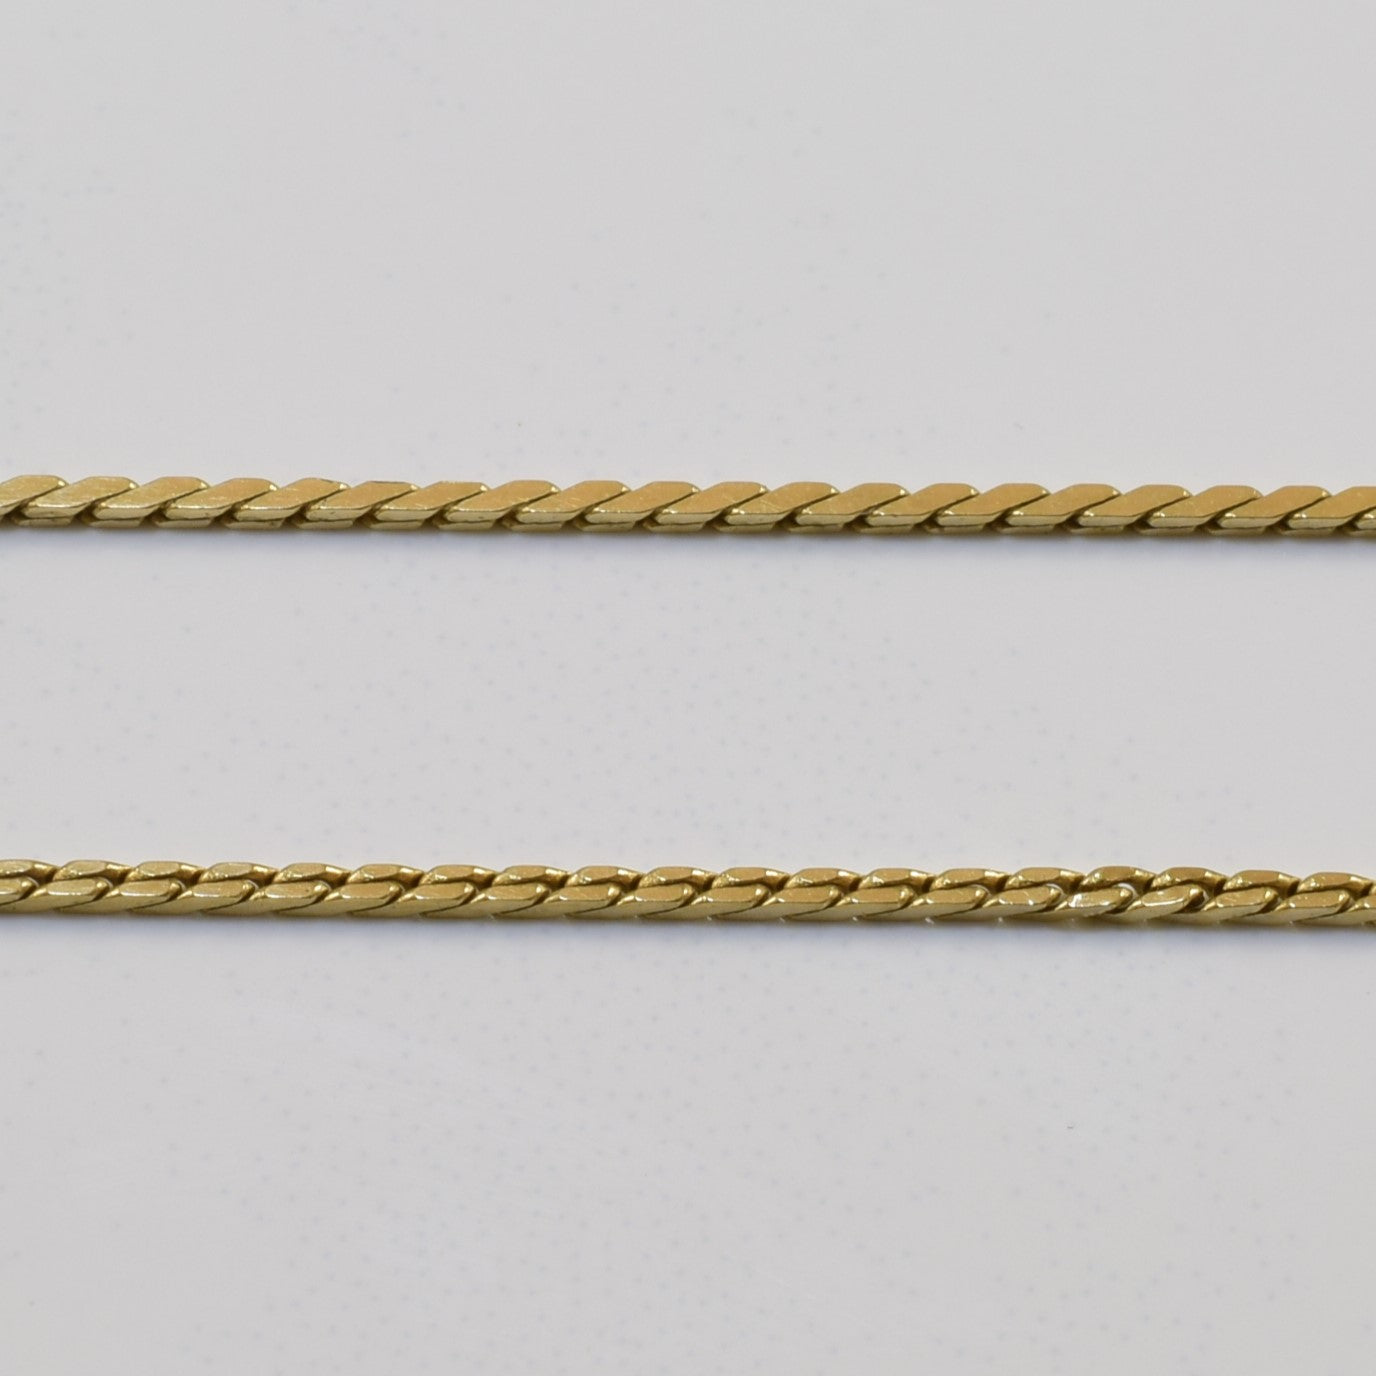 10k Yellow Gold Serpentine Chain | 18